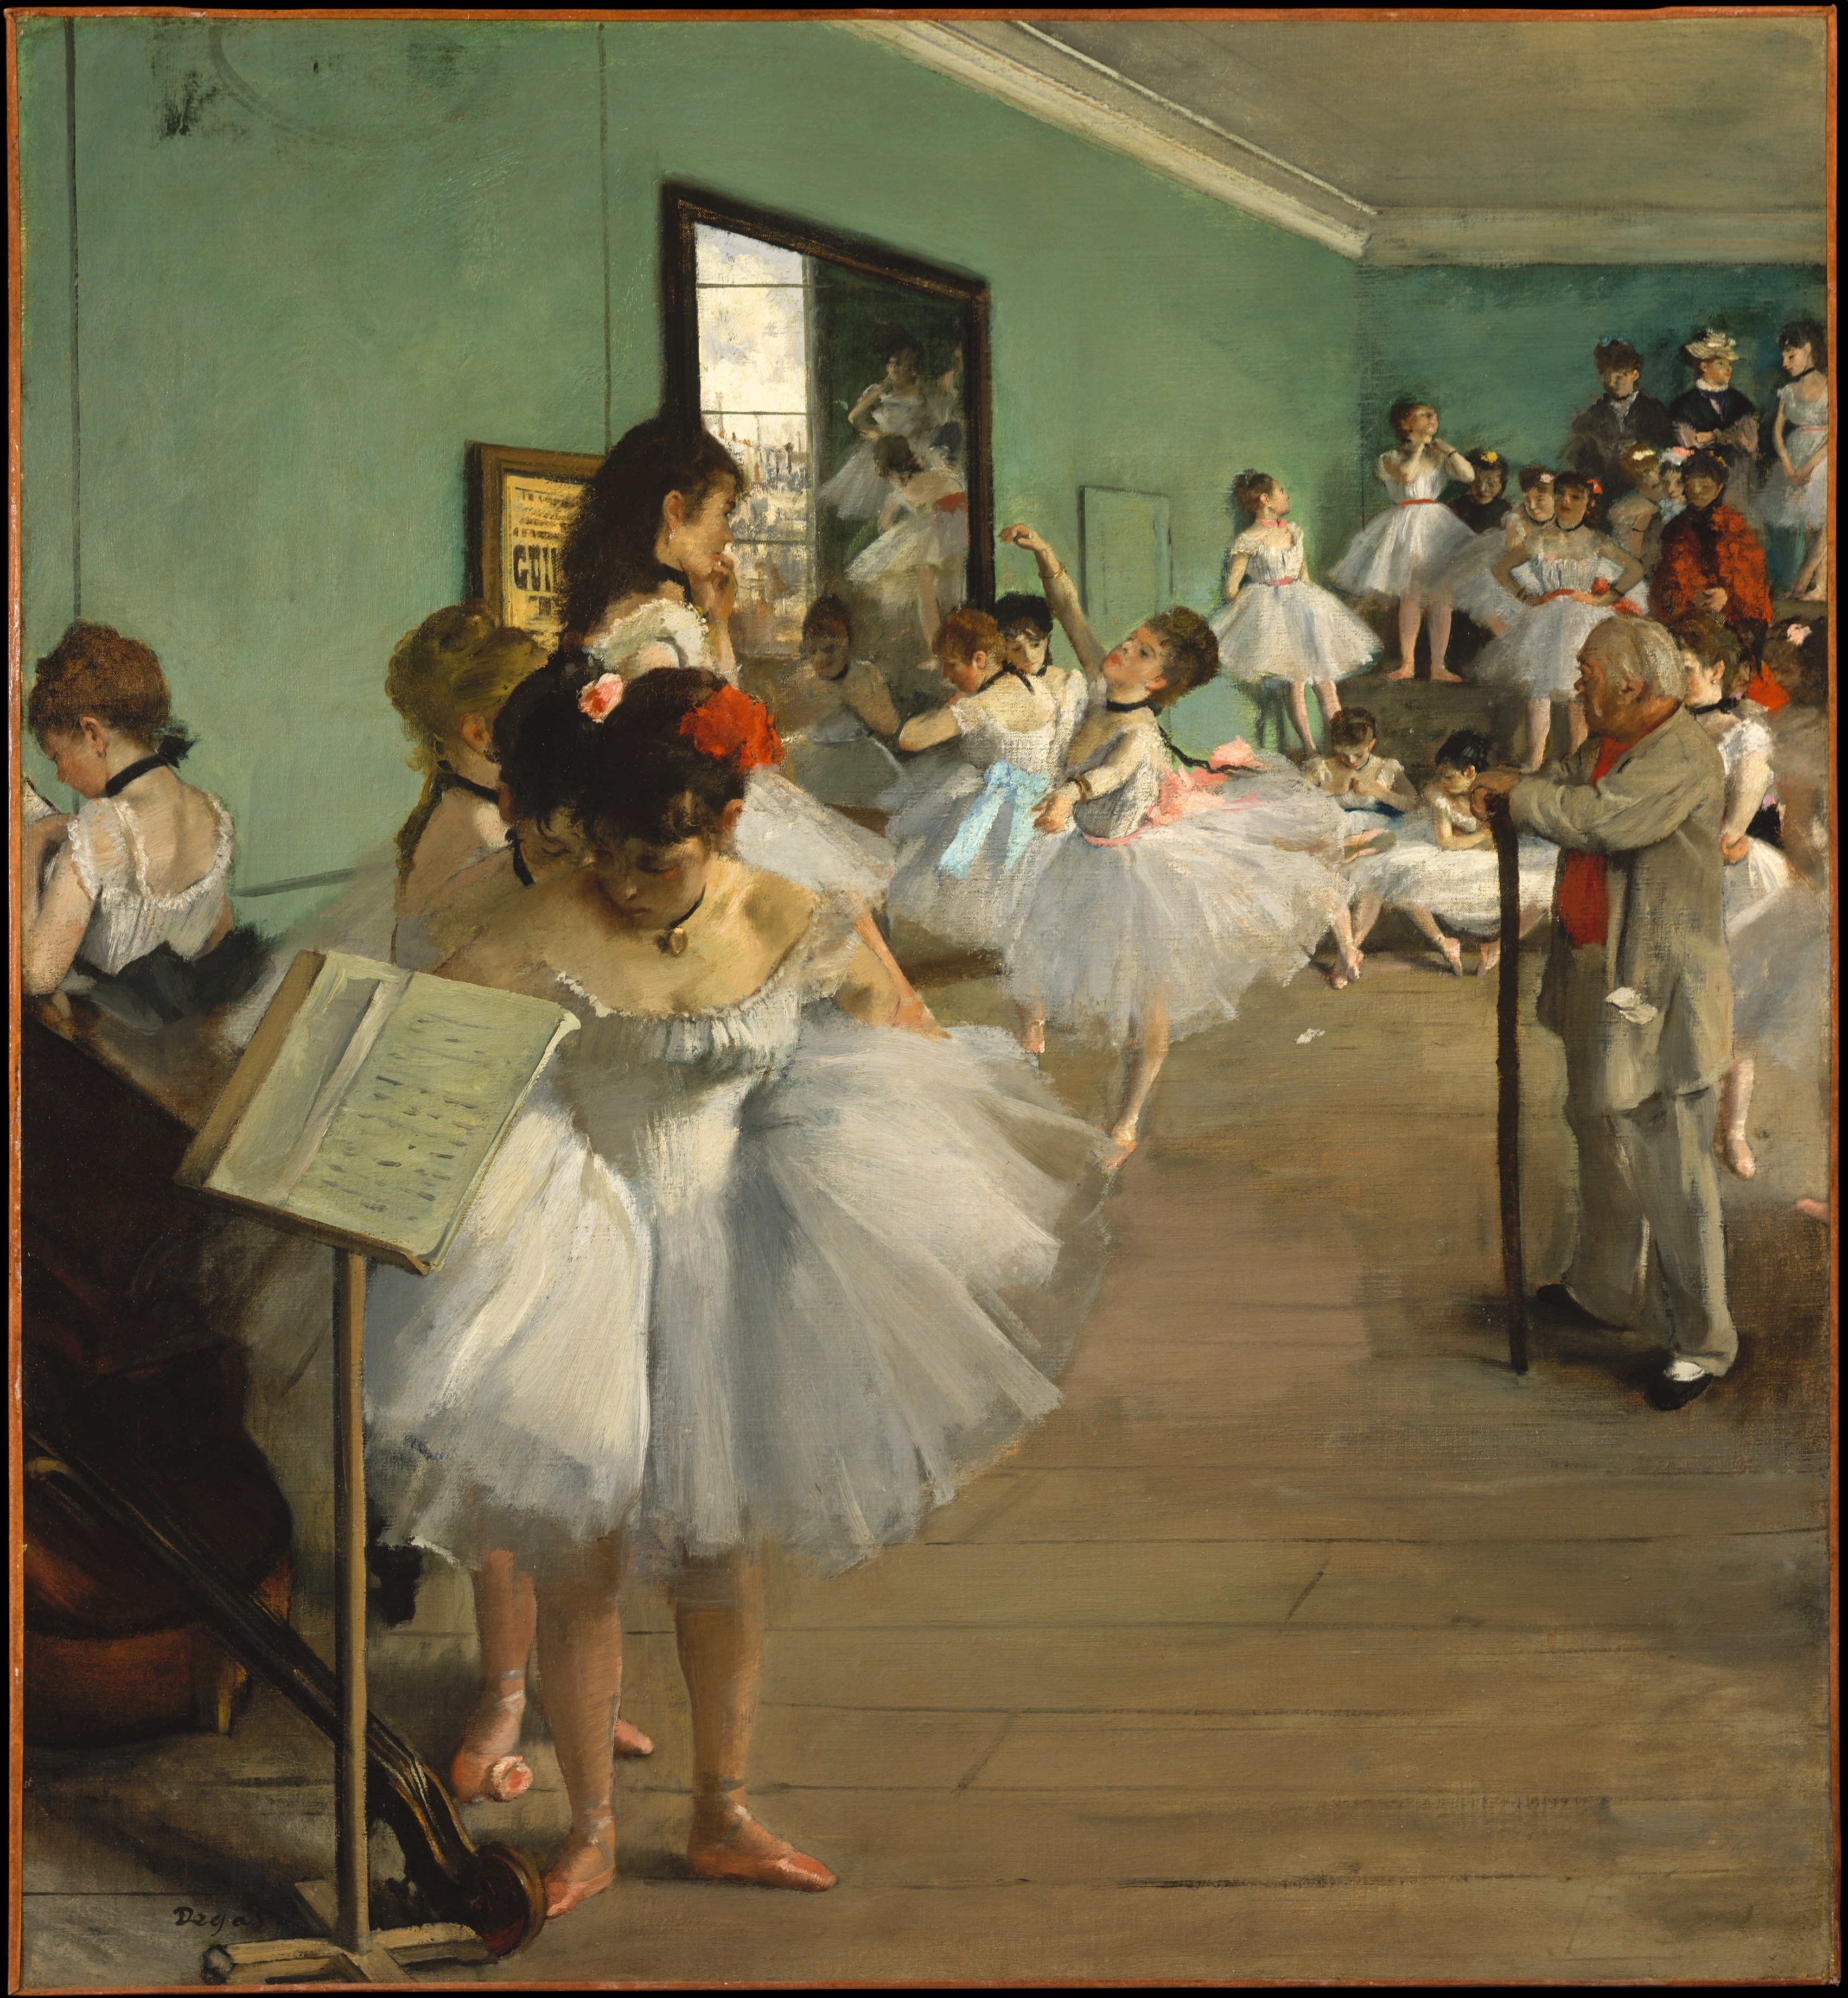 La clase de baile by Edgar Degas - 1874 - 83,5 x 77,2 cm Museo Metropolitano de Arte